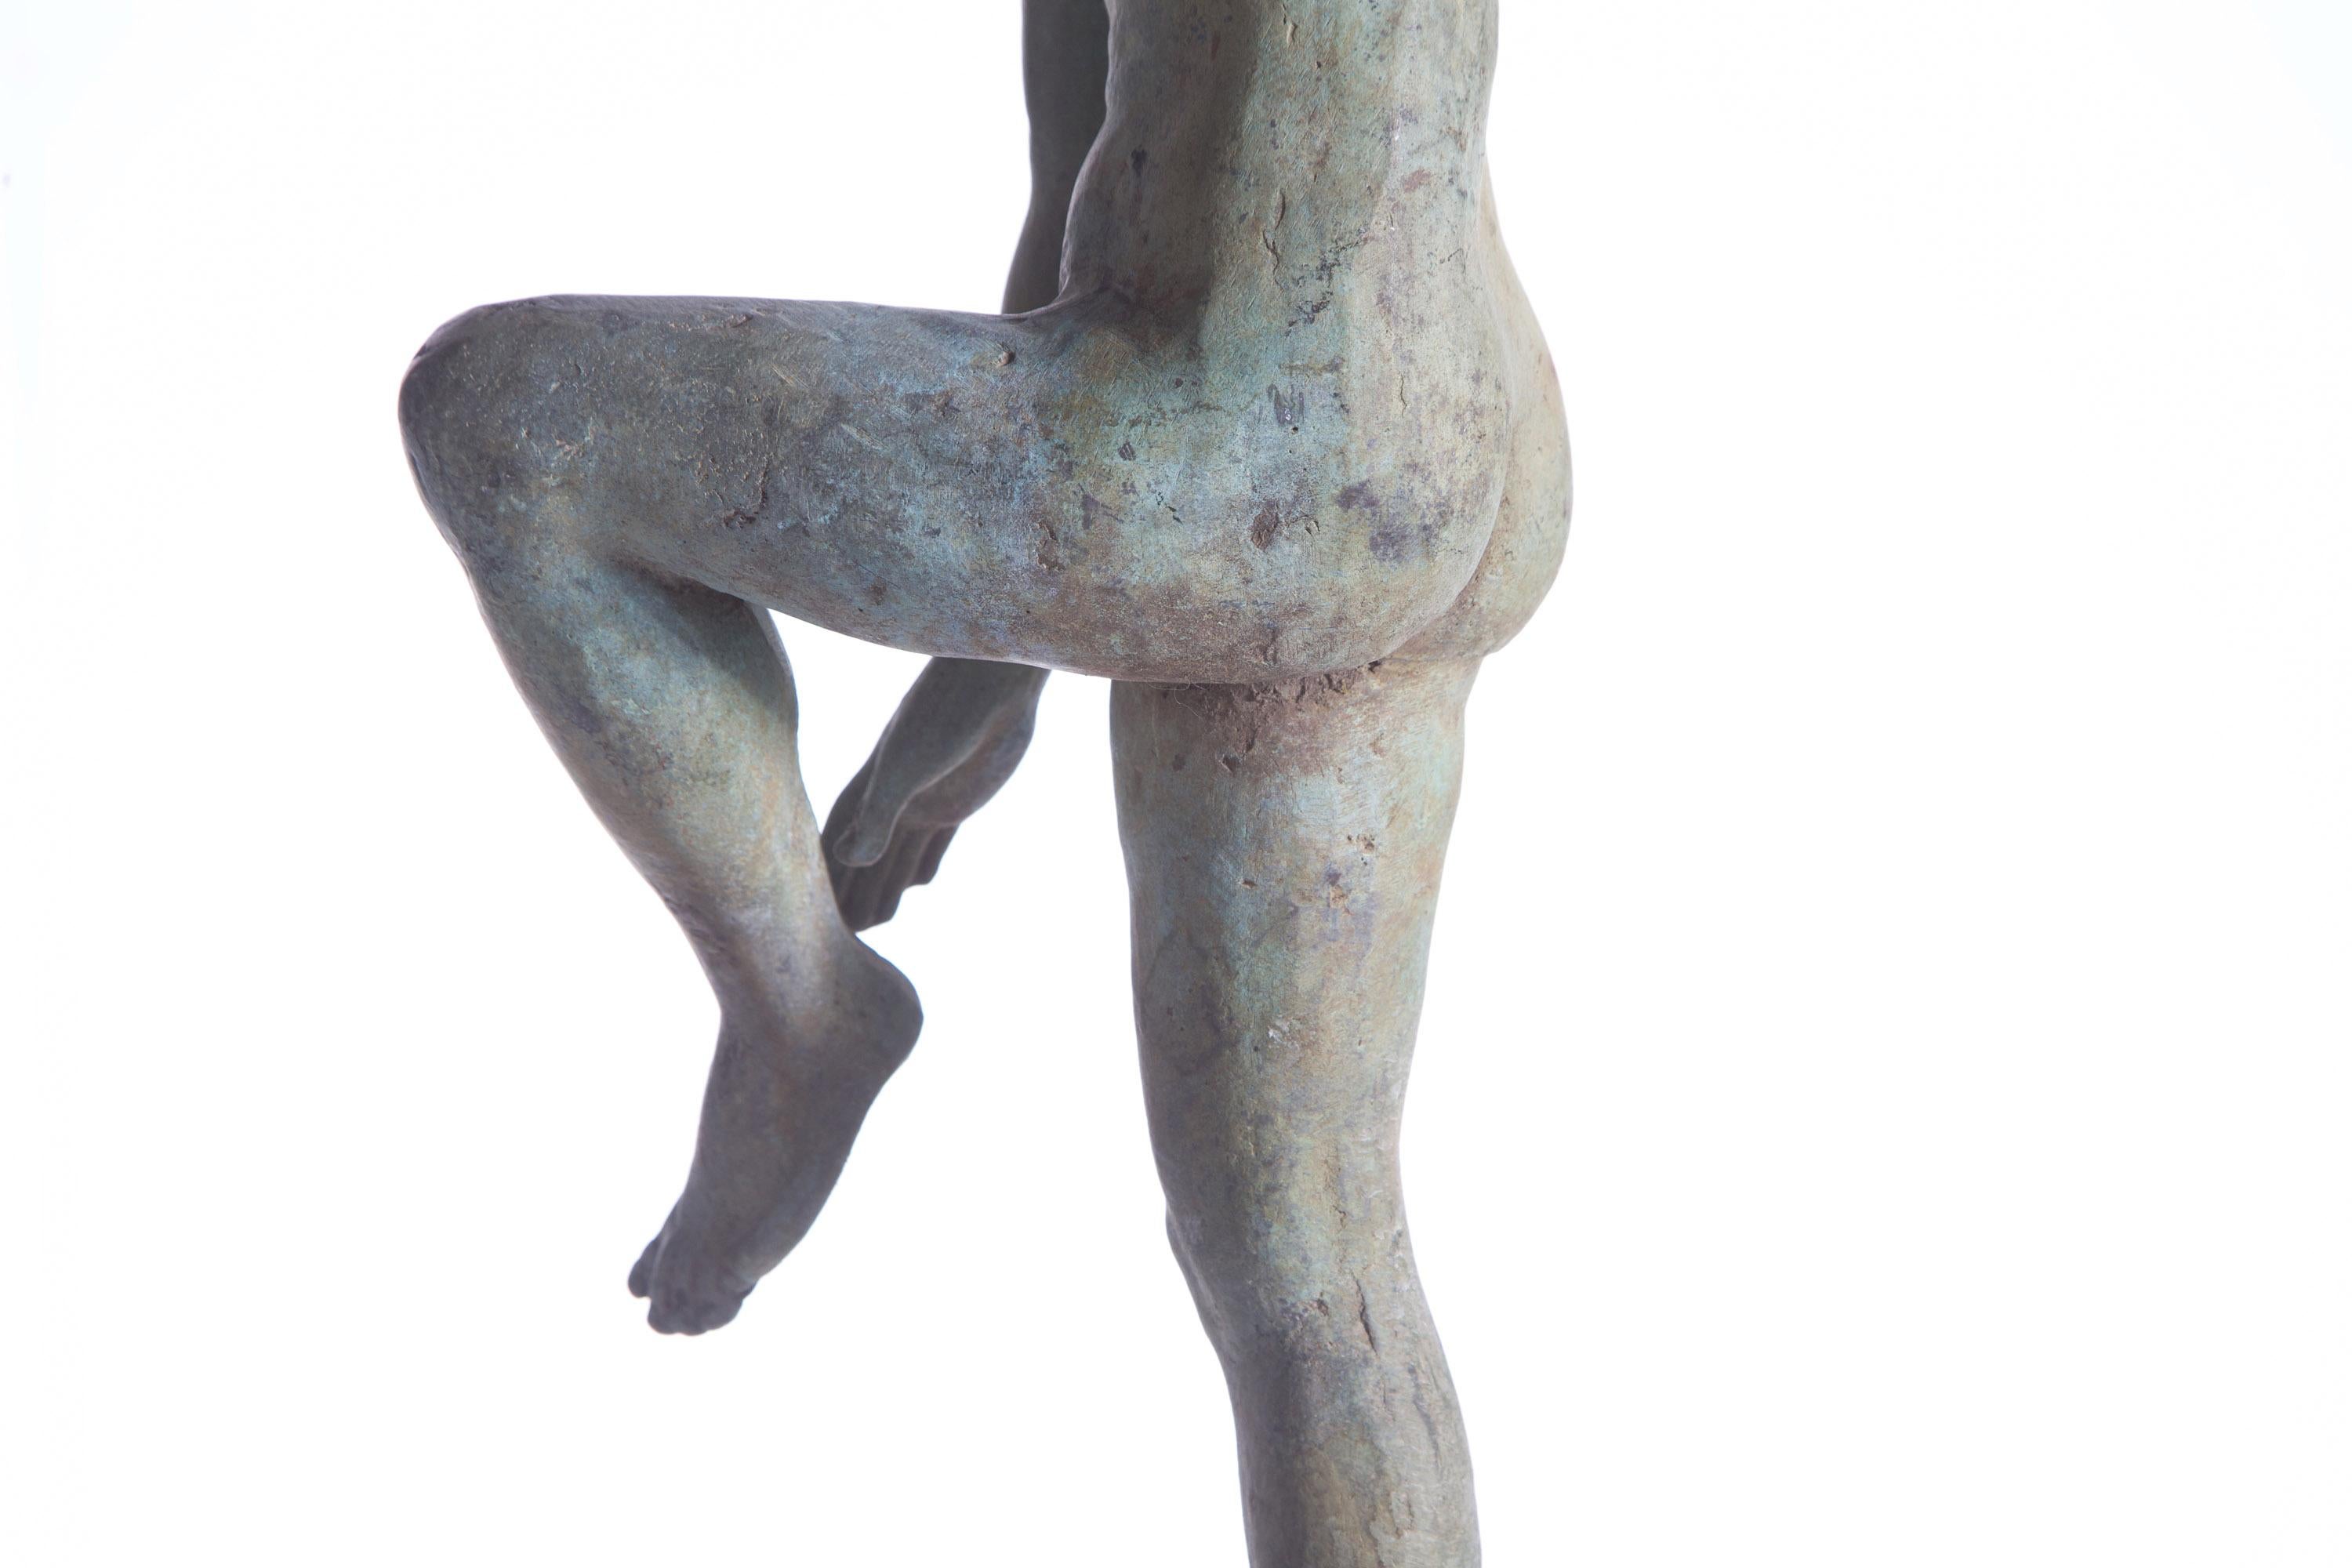 Bronze Century Statue of Venus In Distressed Condition In Pease pottage, West Sussex